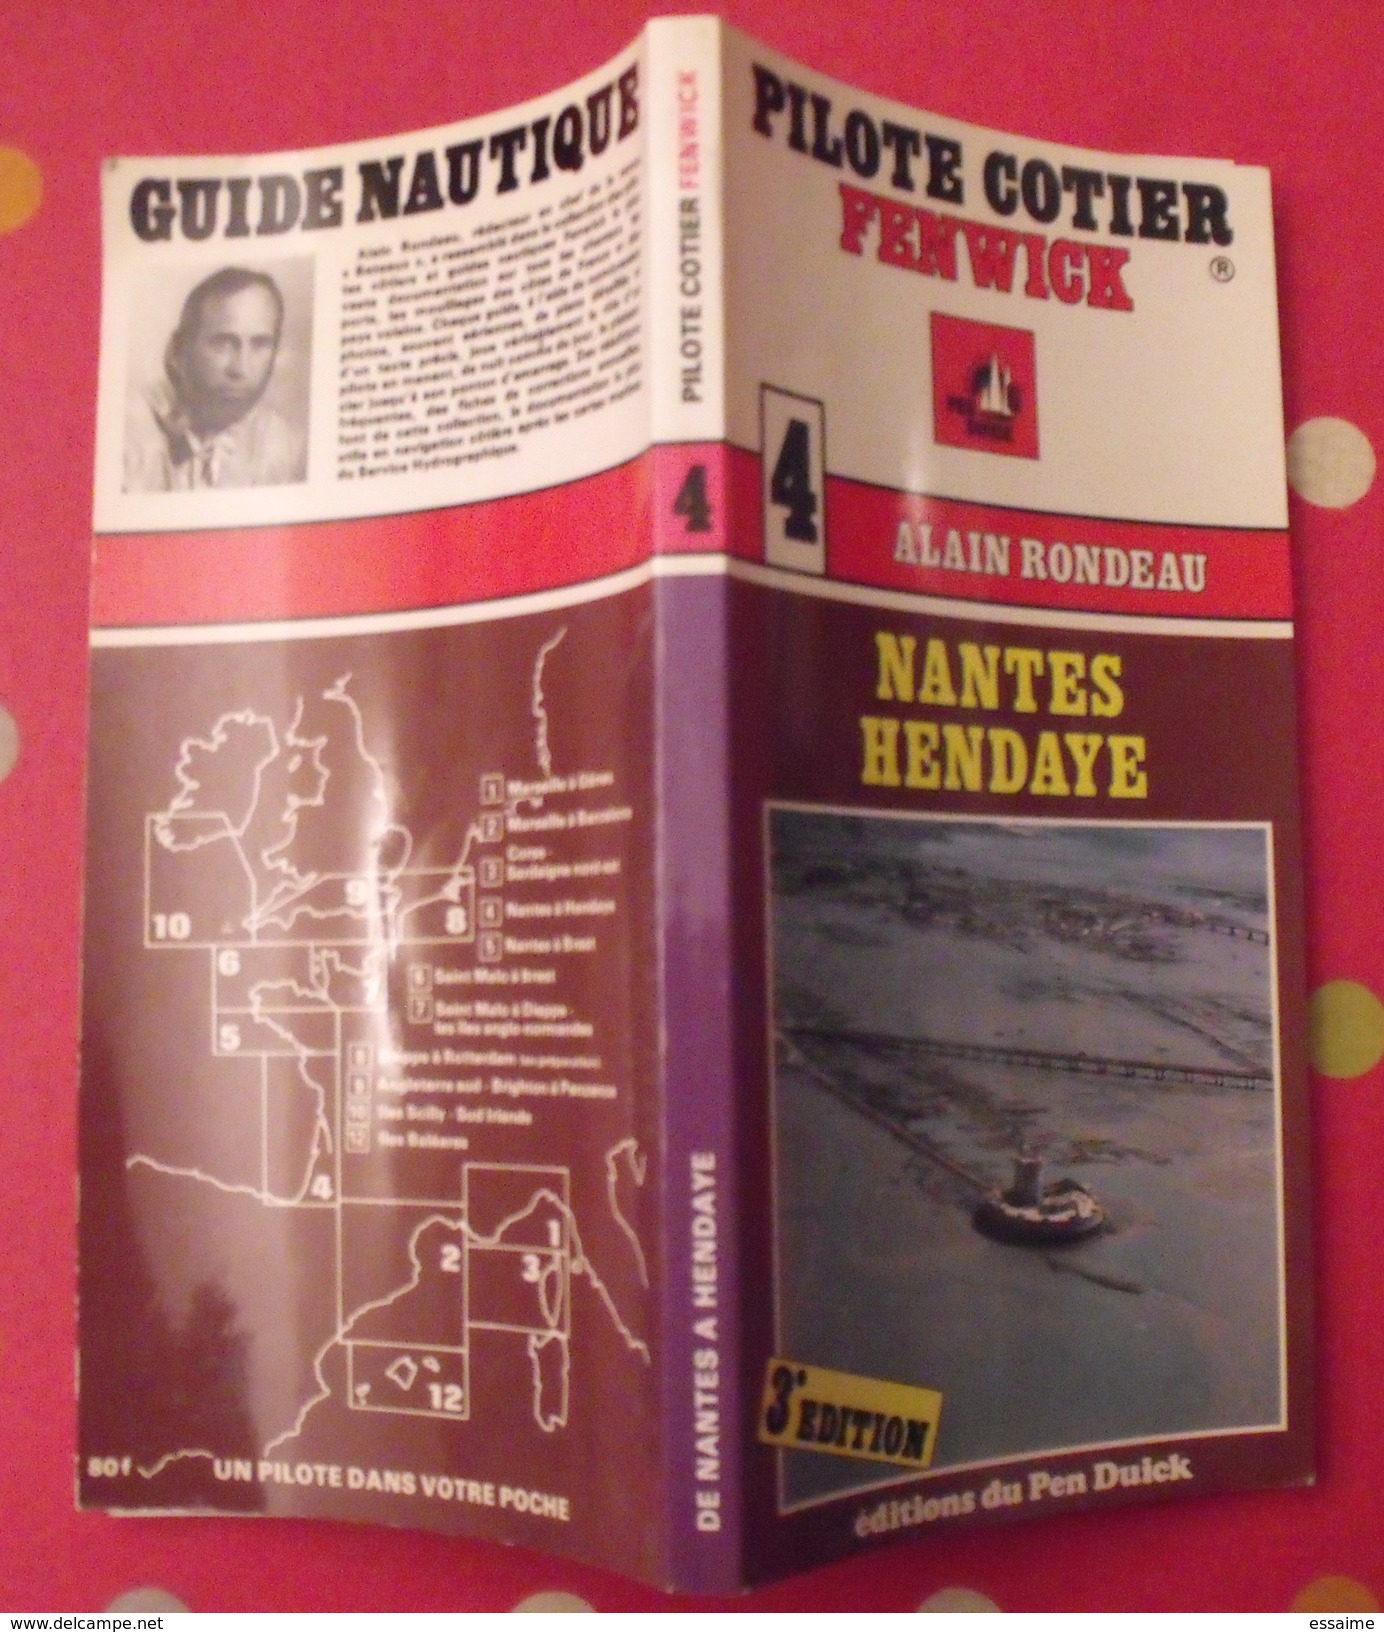 Pilote Cotier Fenwick N° 4 De Nantes à Hendaye. Alain Rondeau. 1983 - Boats